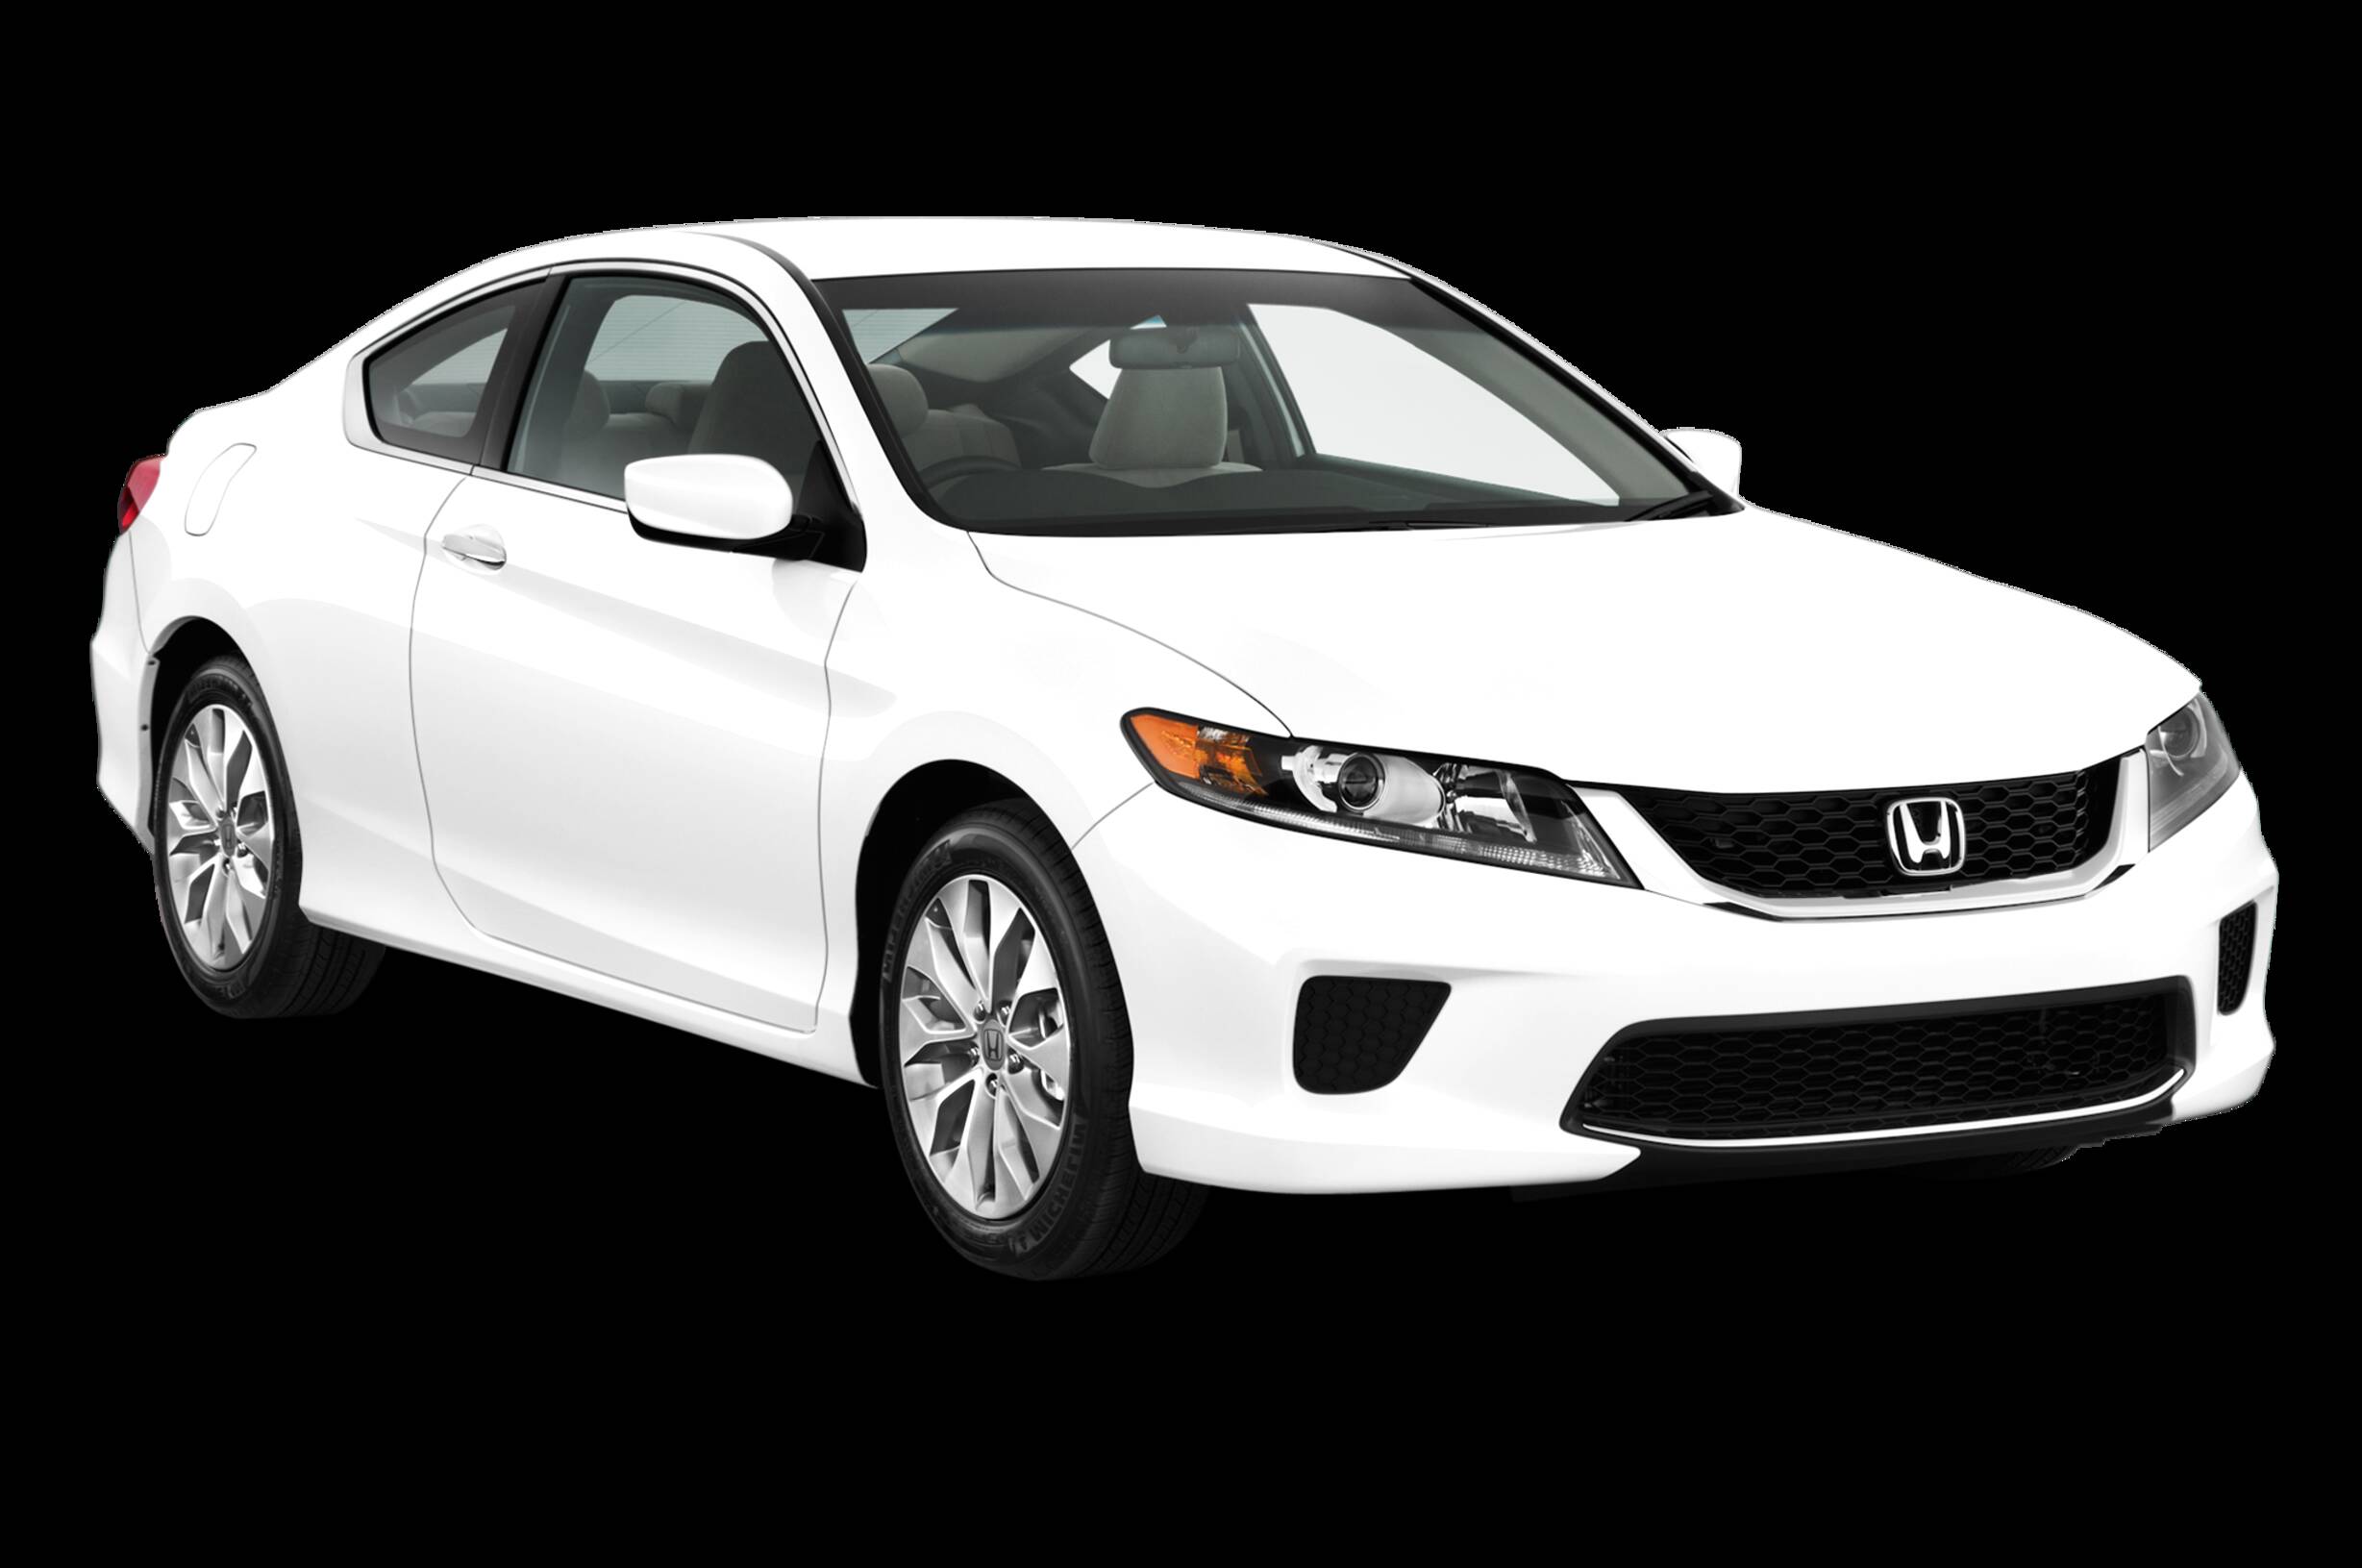 2014 Honda Accord For Sale In Uk 57 Used 2014 Honda Accords